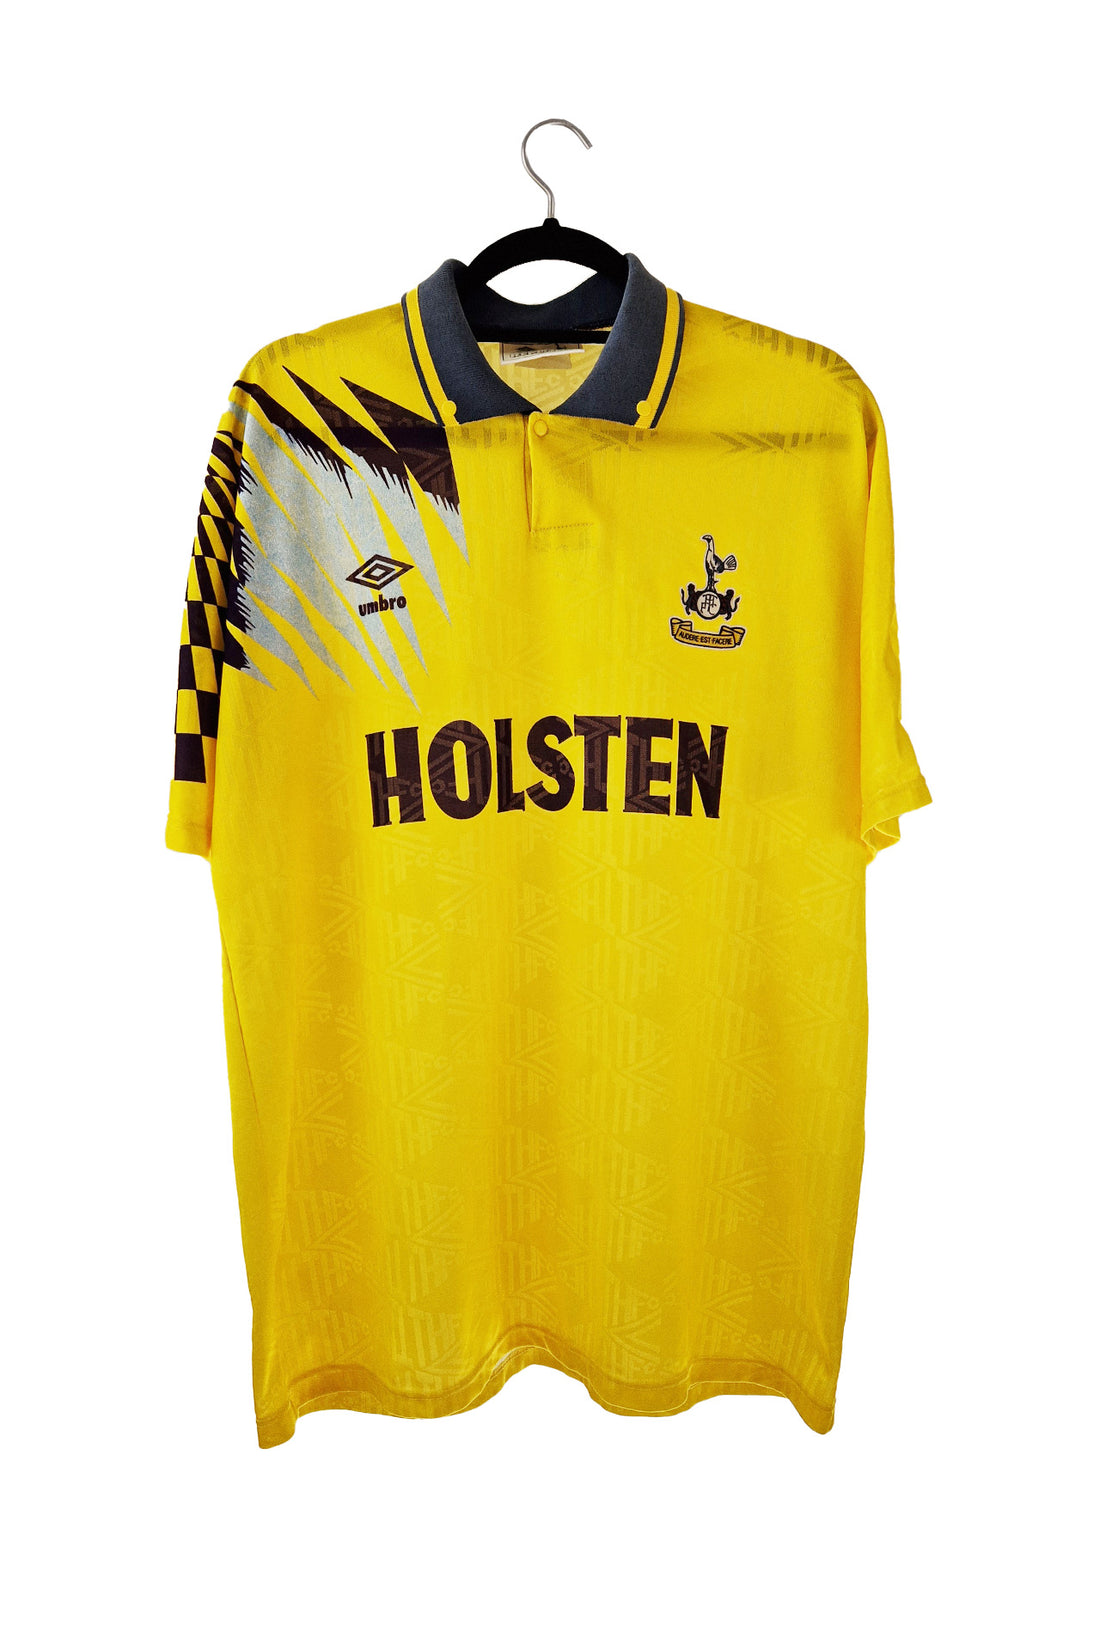 Tottenham Hotspur 1991 - 1994 Away Football Shirt